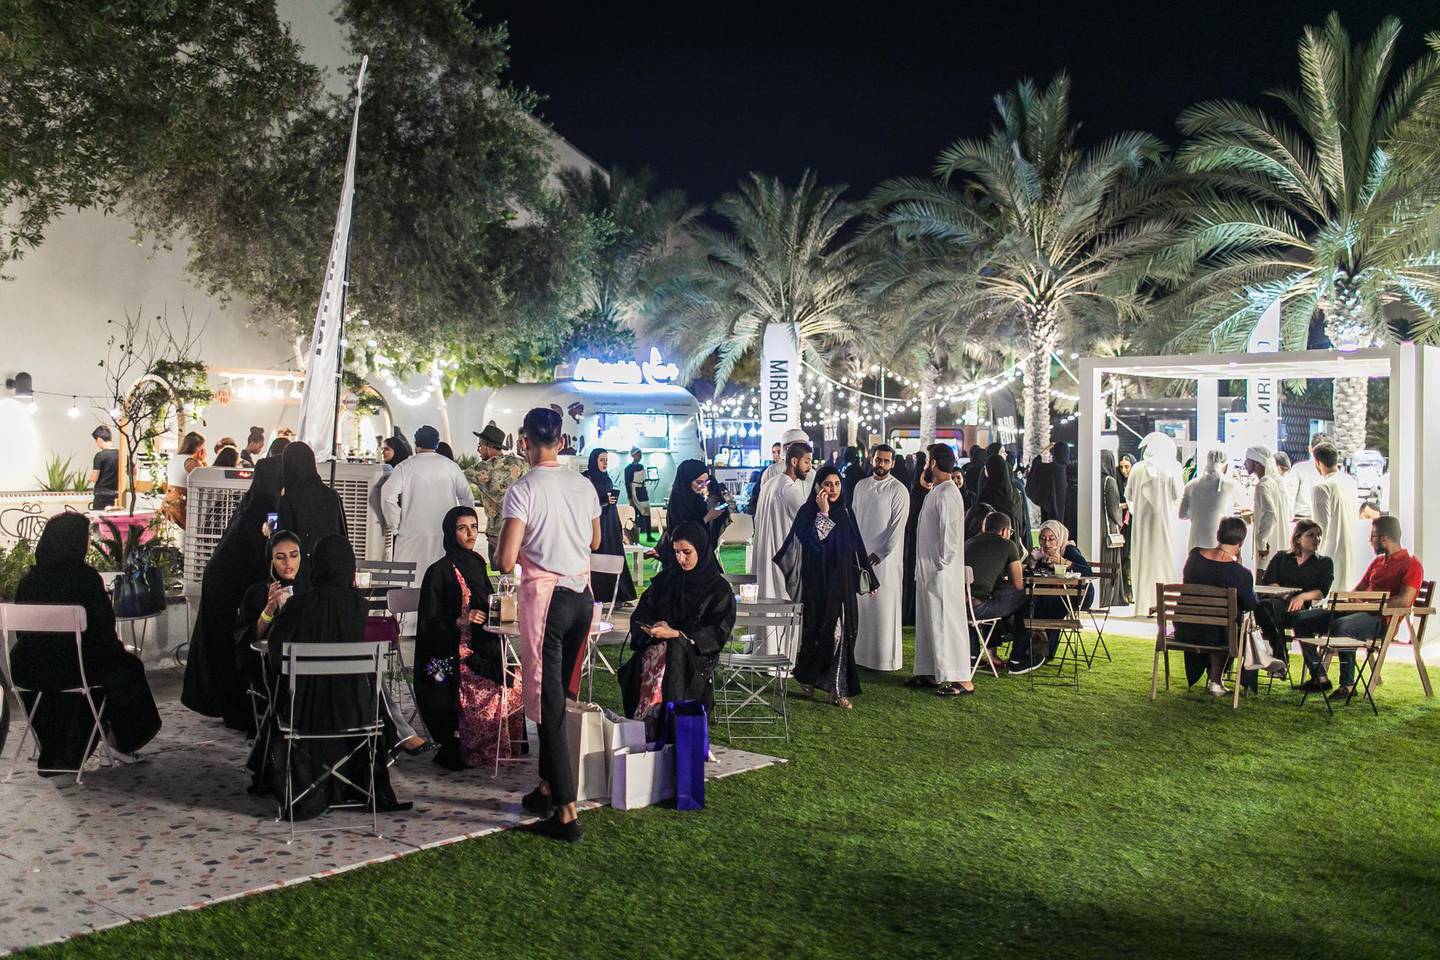 Manarat Al Saadiyat, where Hay Festival Abu Dhabi will be held in 2020